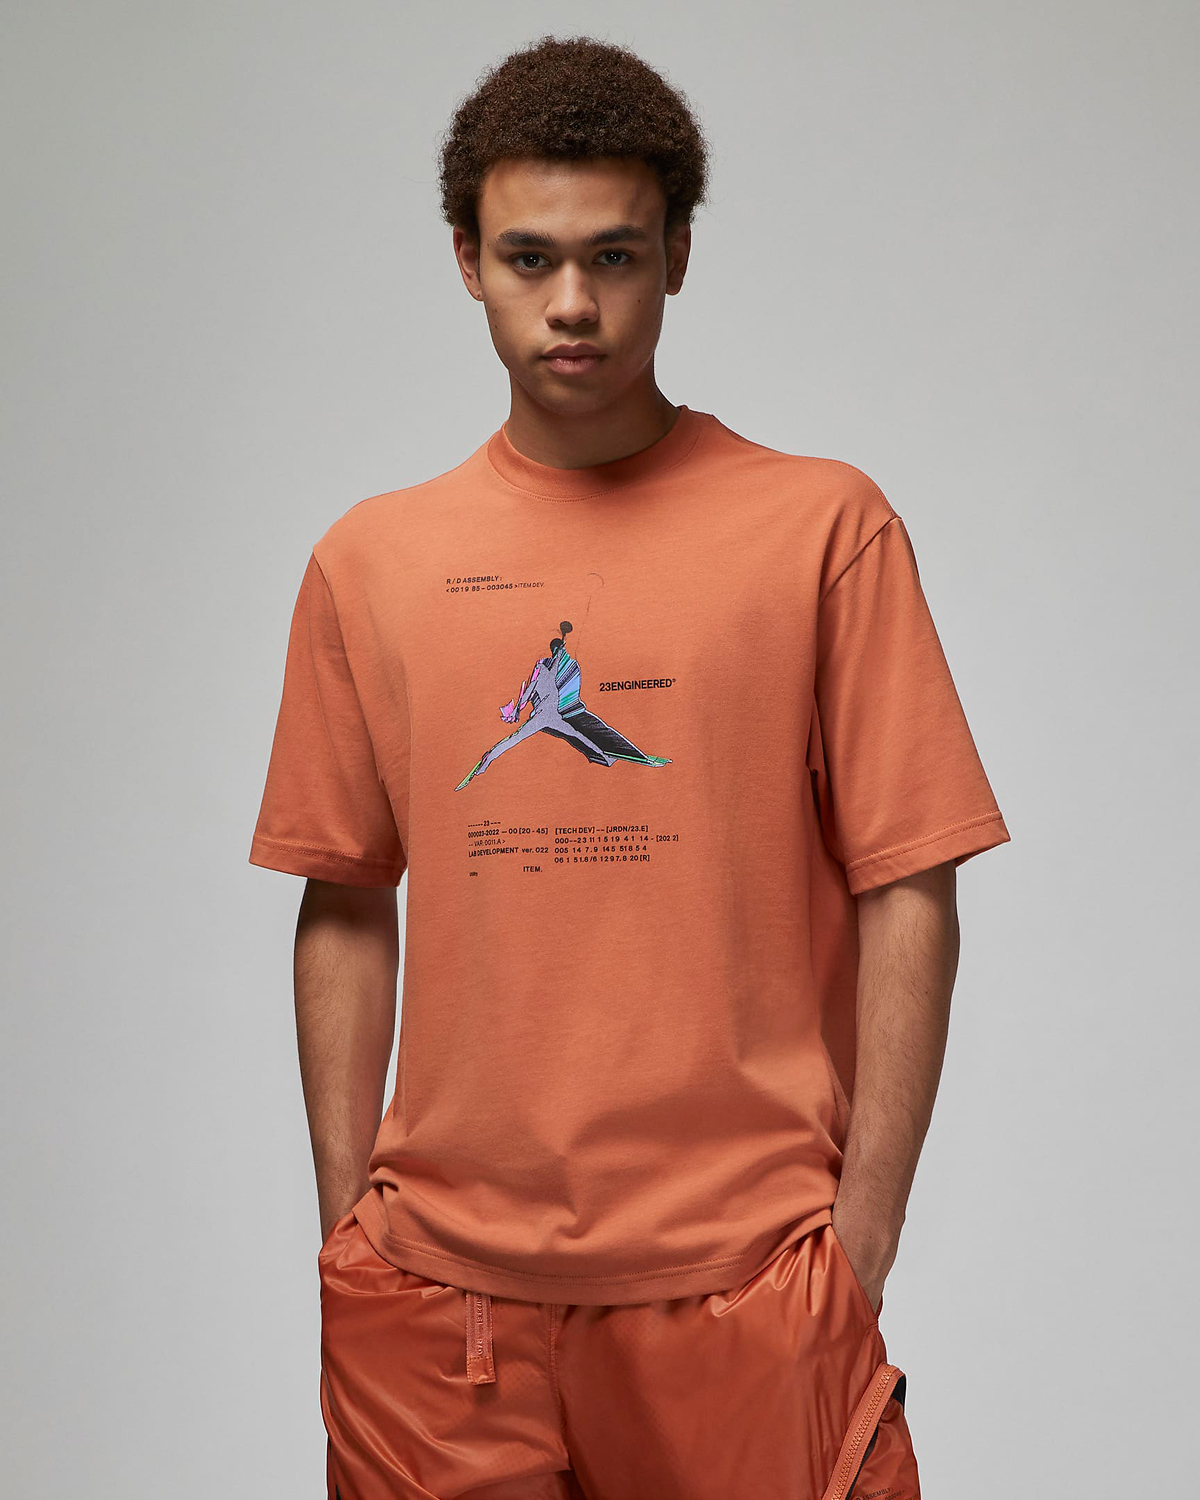 jordan-23-engineered-t-shirt-rust-oxide-orange-brown-1